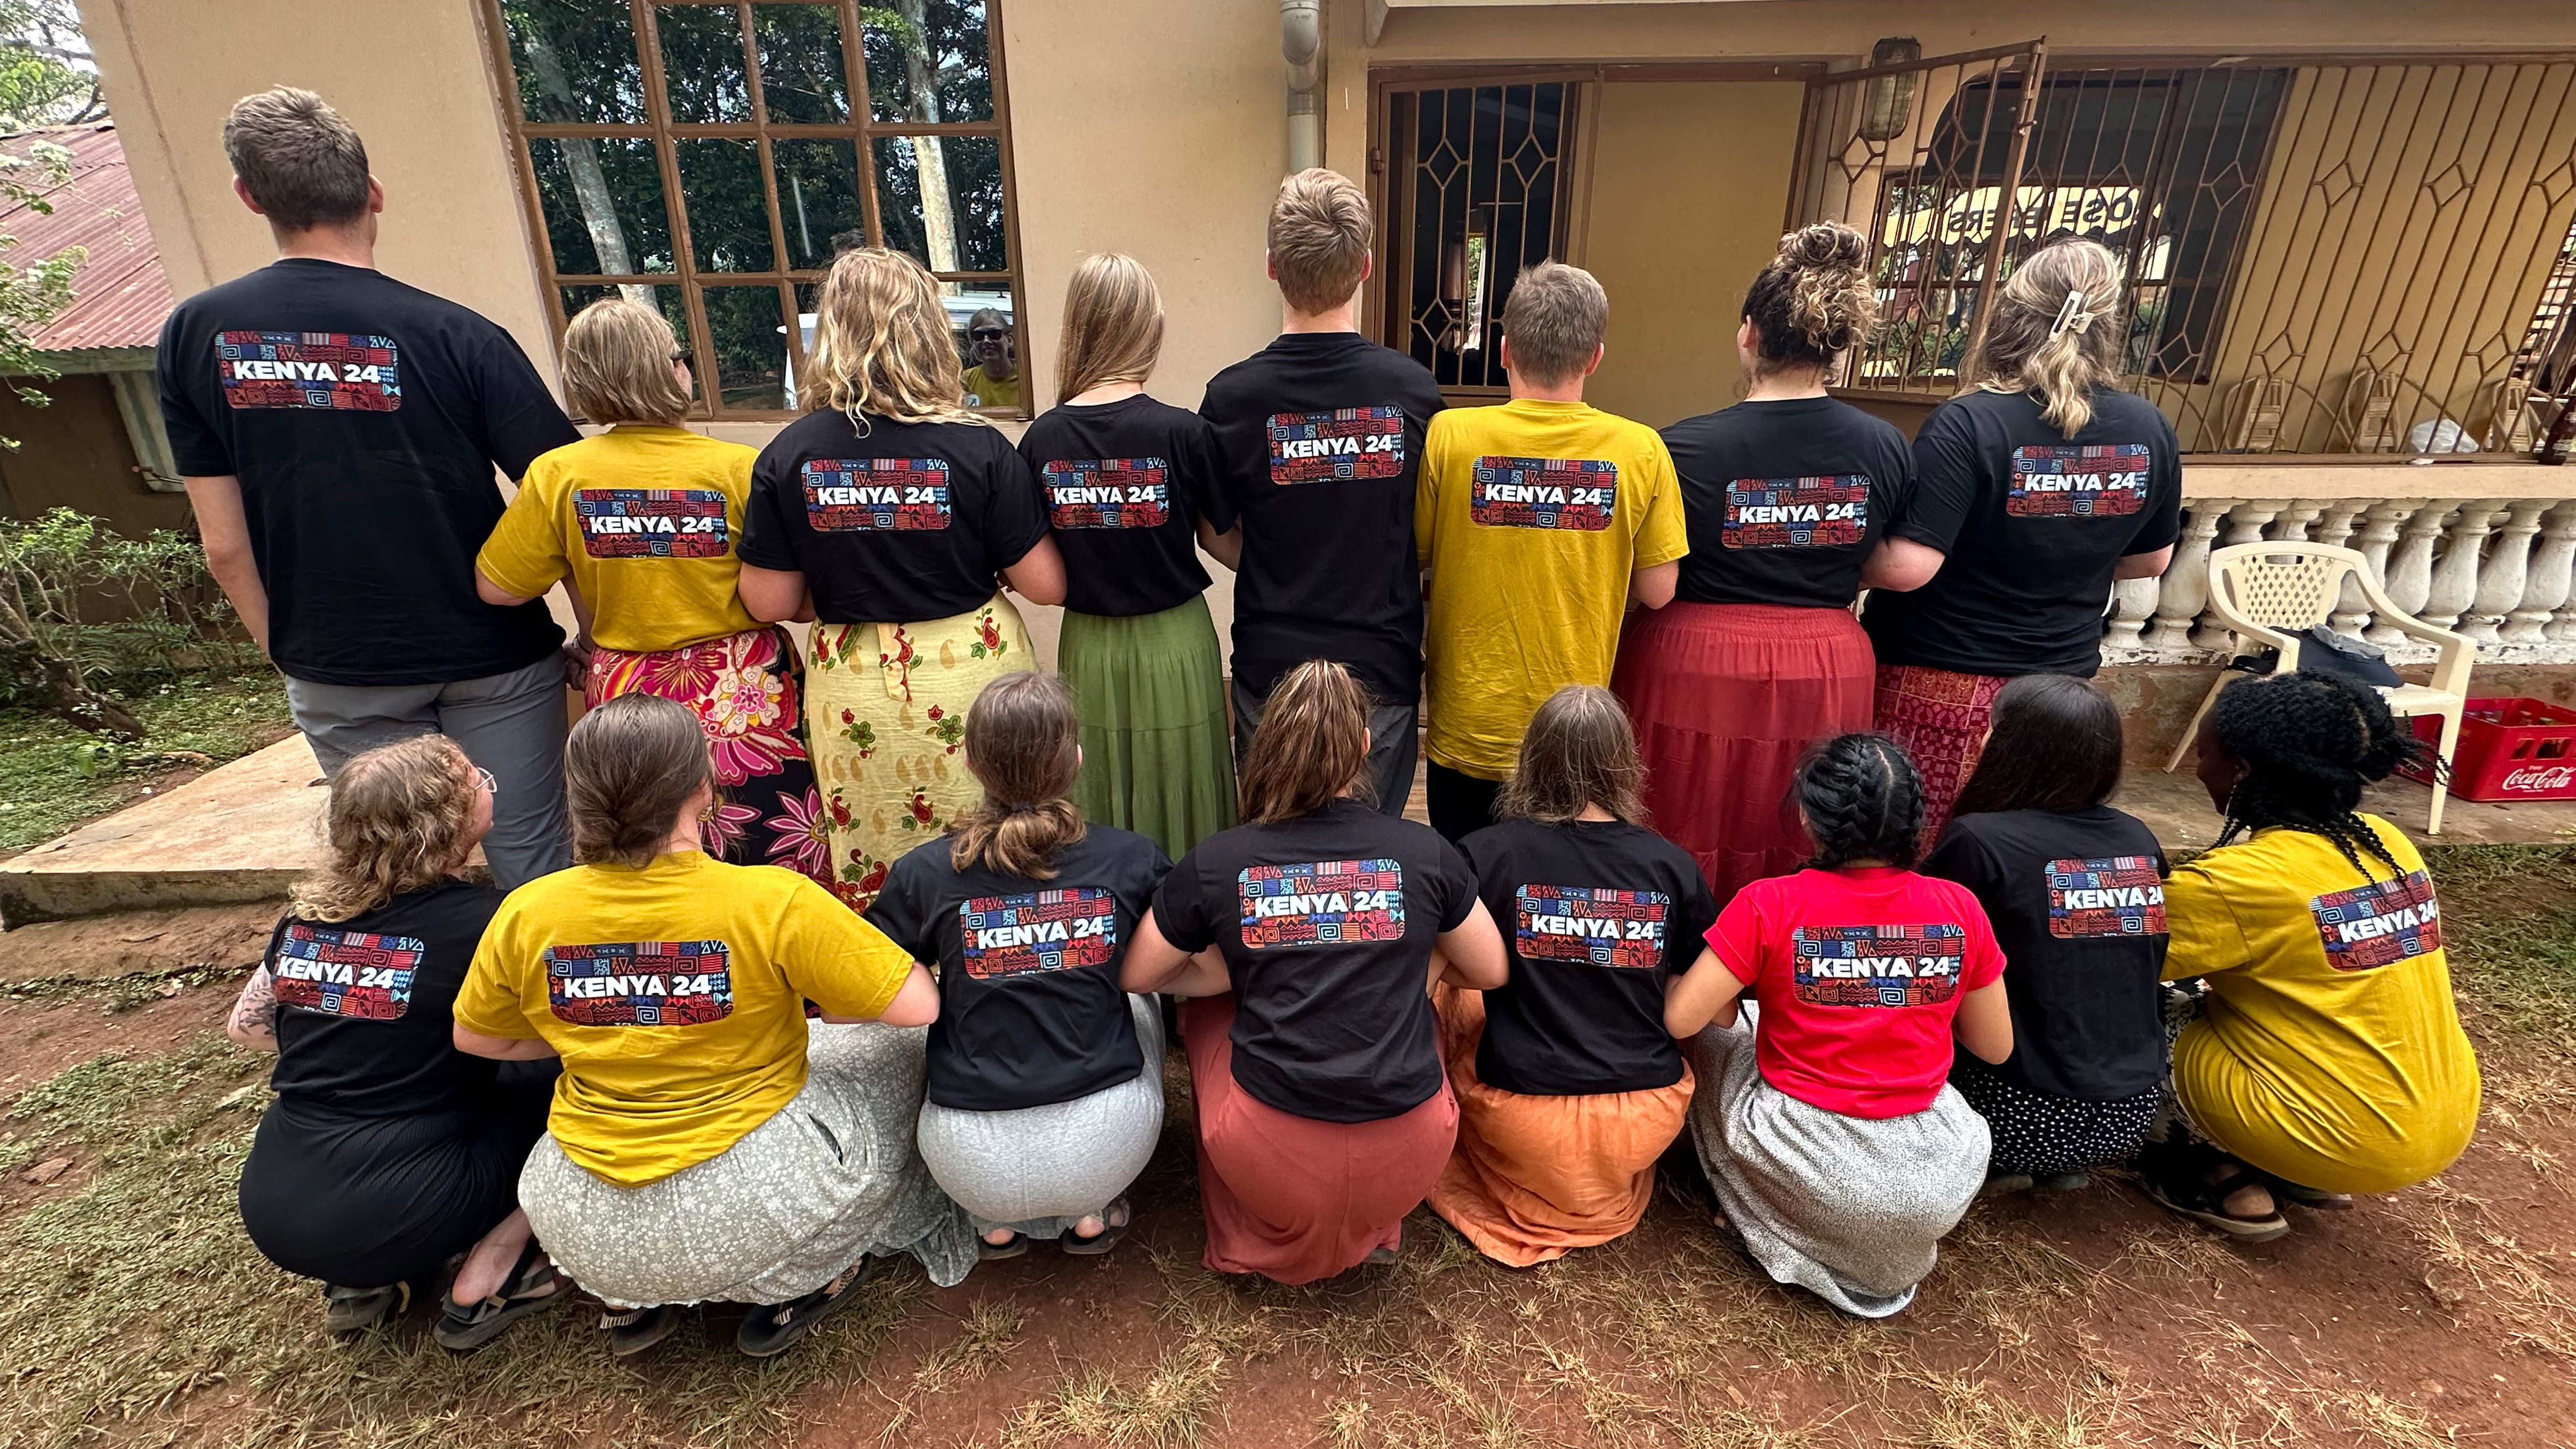 AU Students in Kenya '24 Shirts